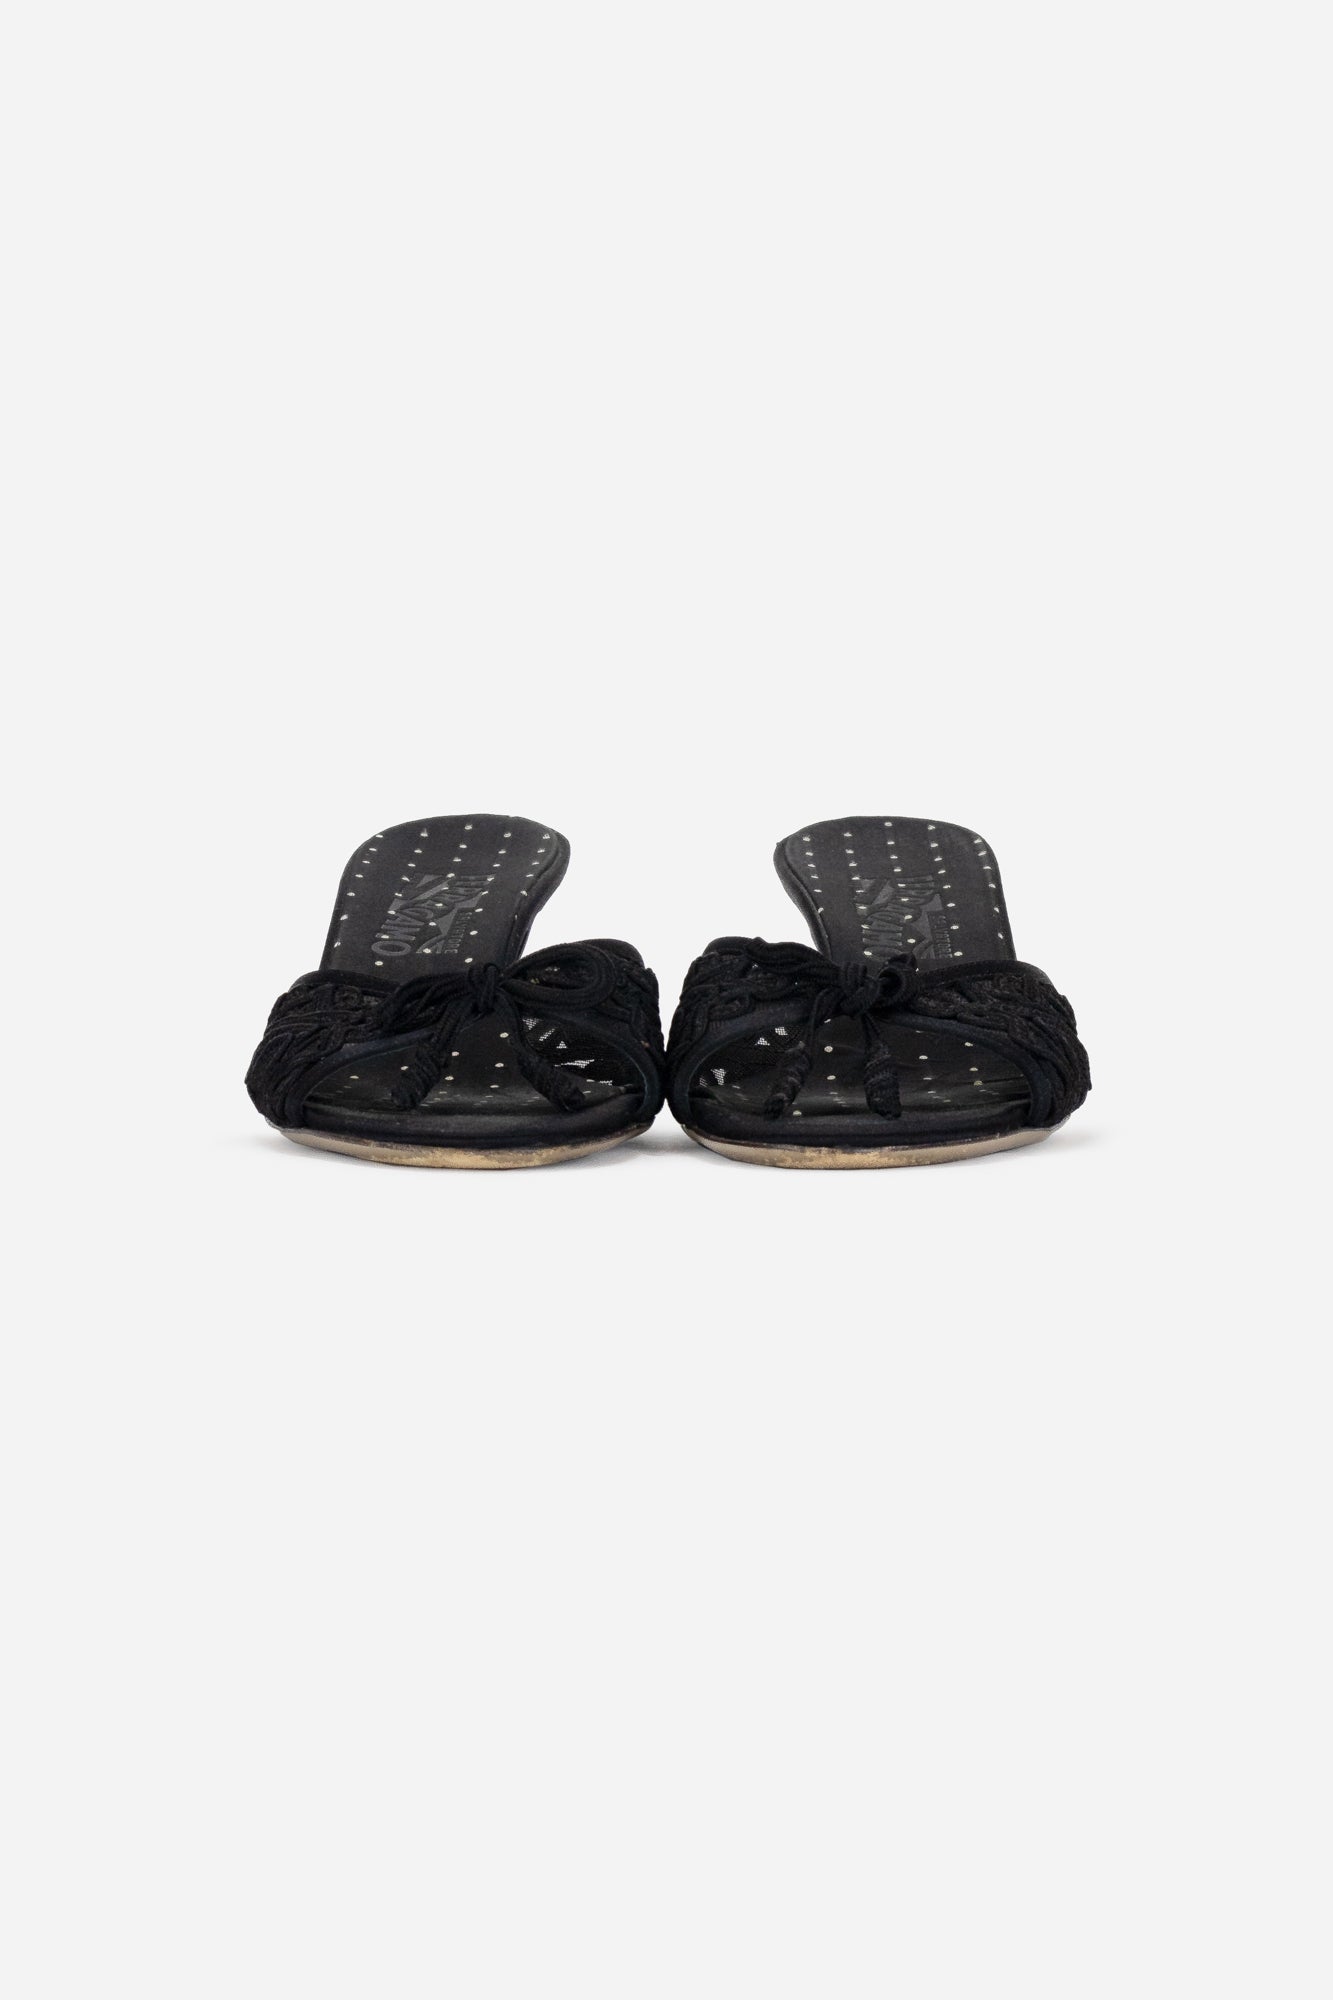 Black Embroided Kitten Heel Sandals